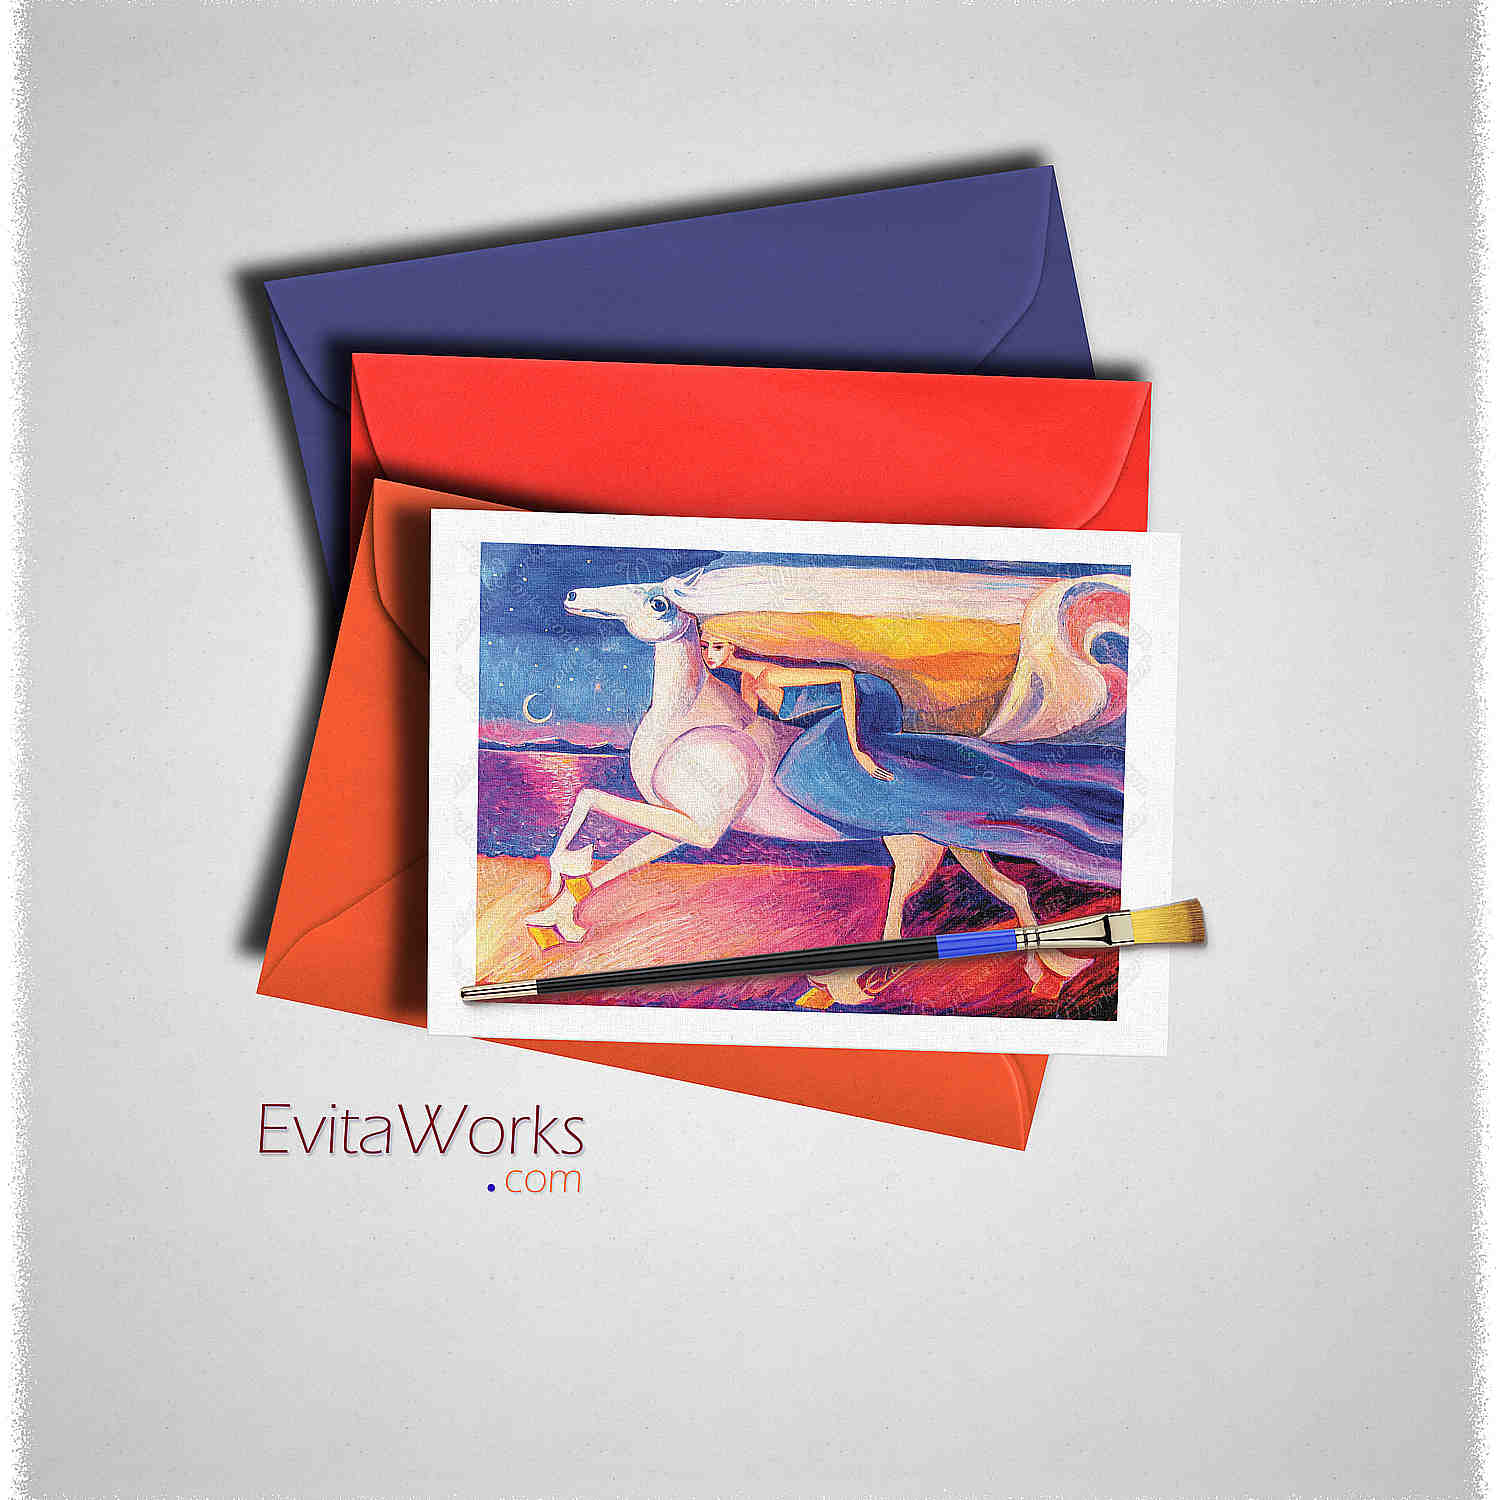 ea escape cd ~ EvitaWorks